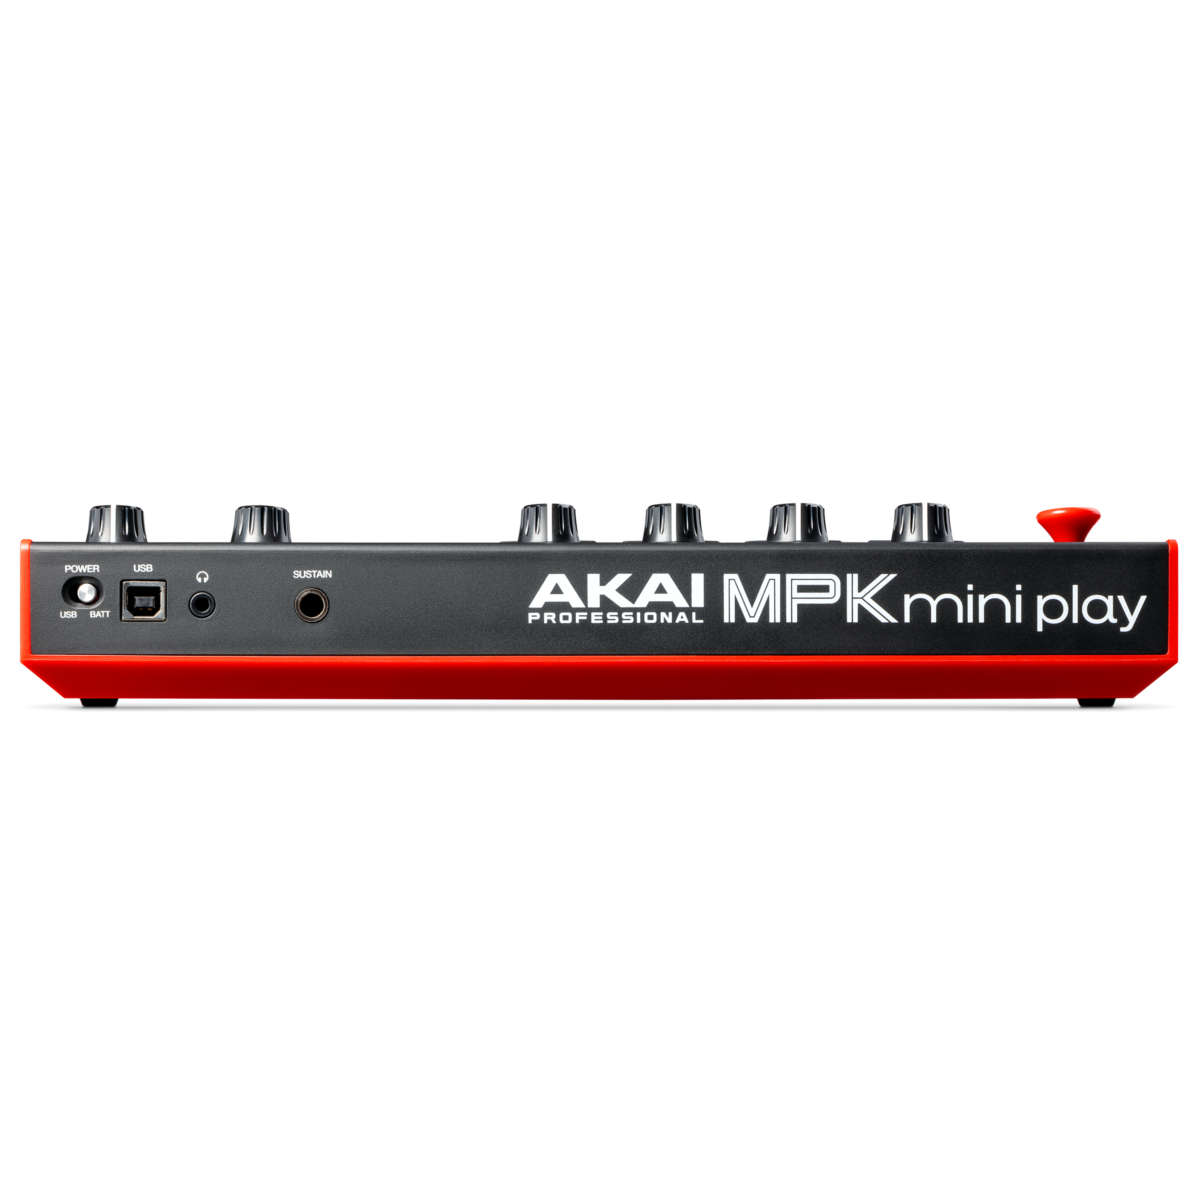 AKAI Professional MPK Mini MK3 - Teclado Controlador MIDI USB de